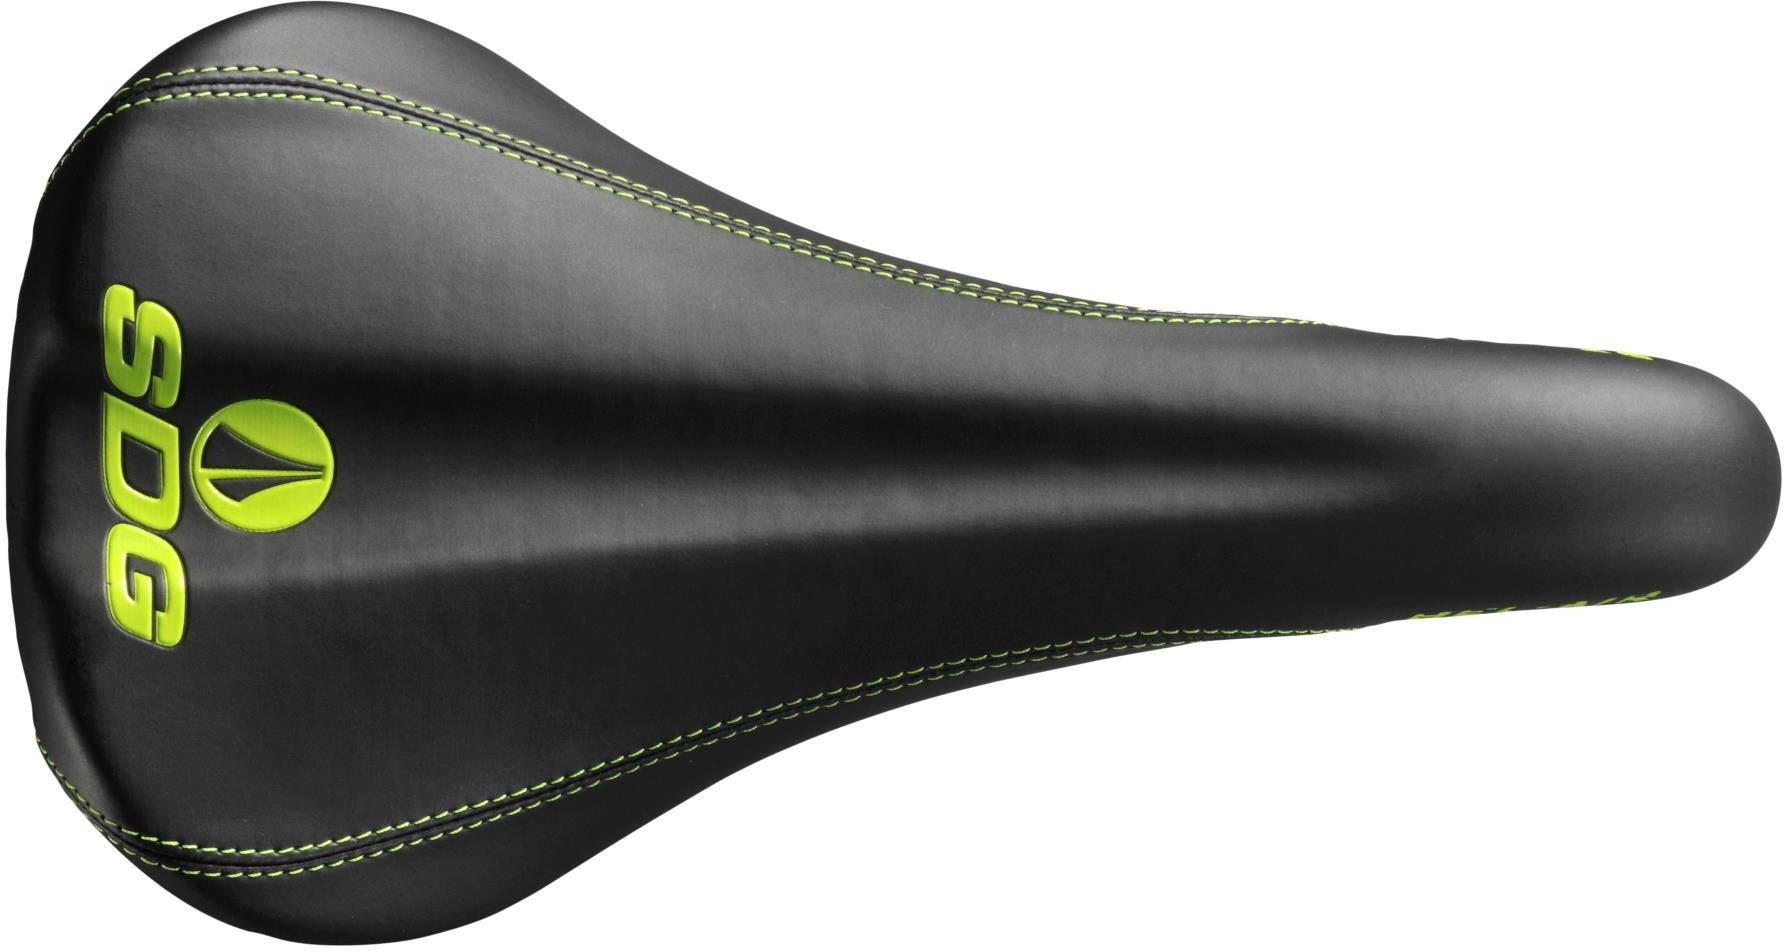 Sdg Bel Air Saddle With Steel Rails - Black/green